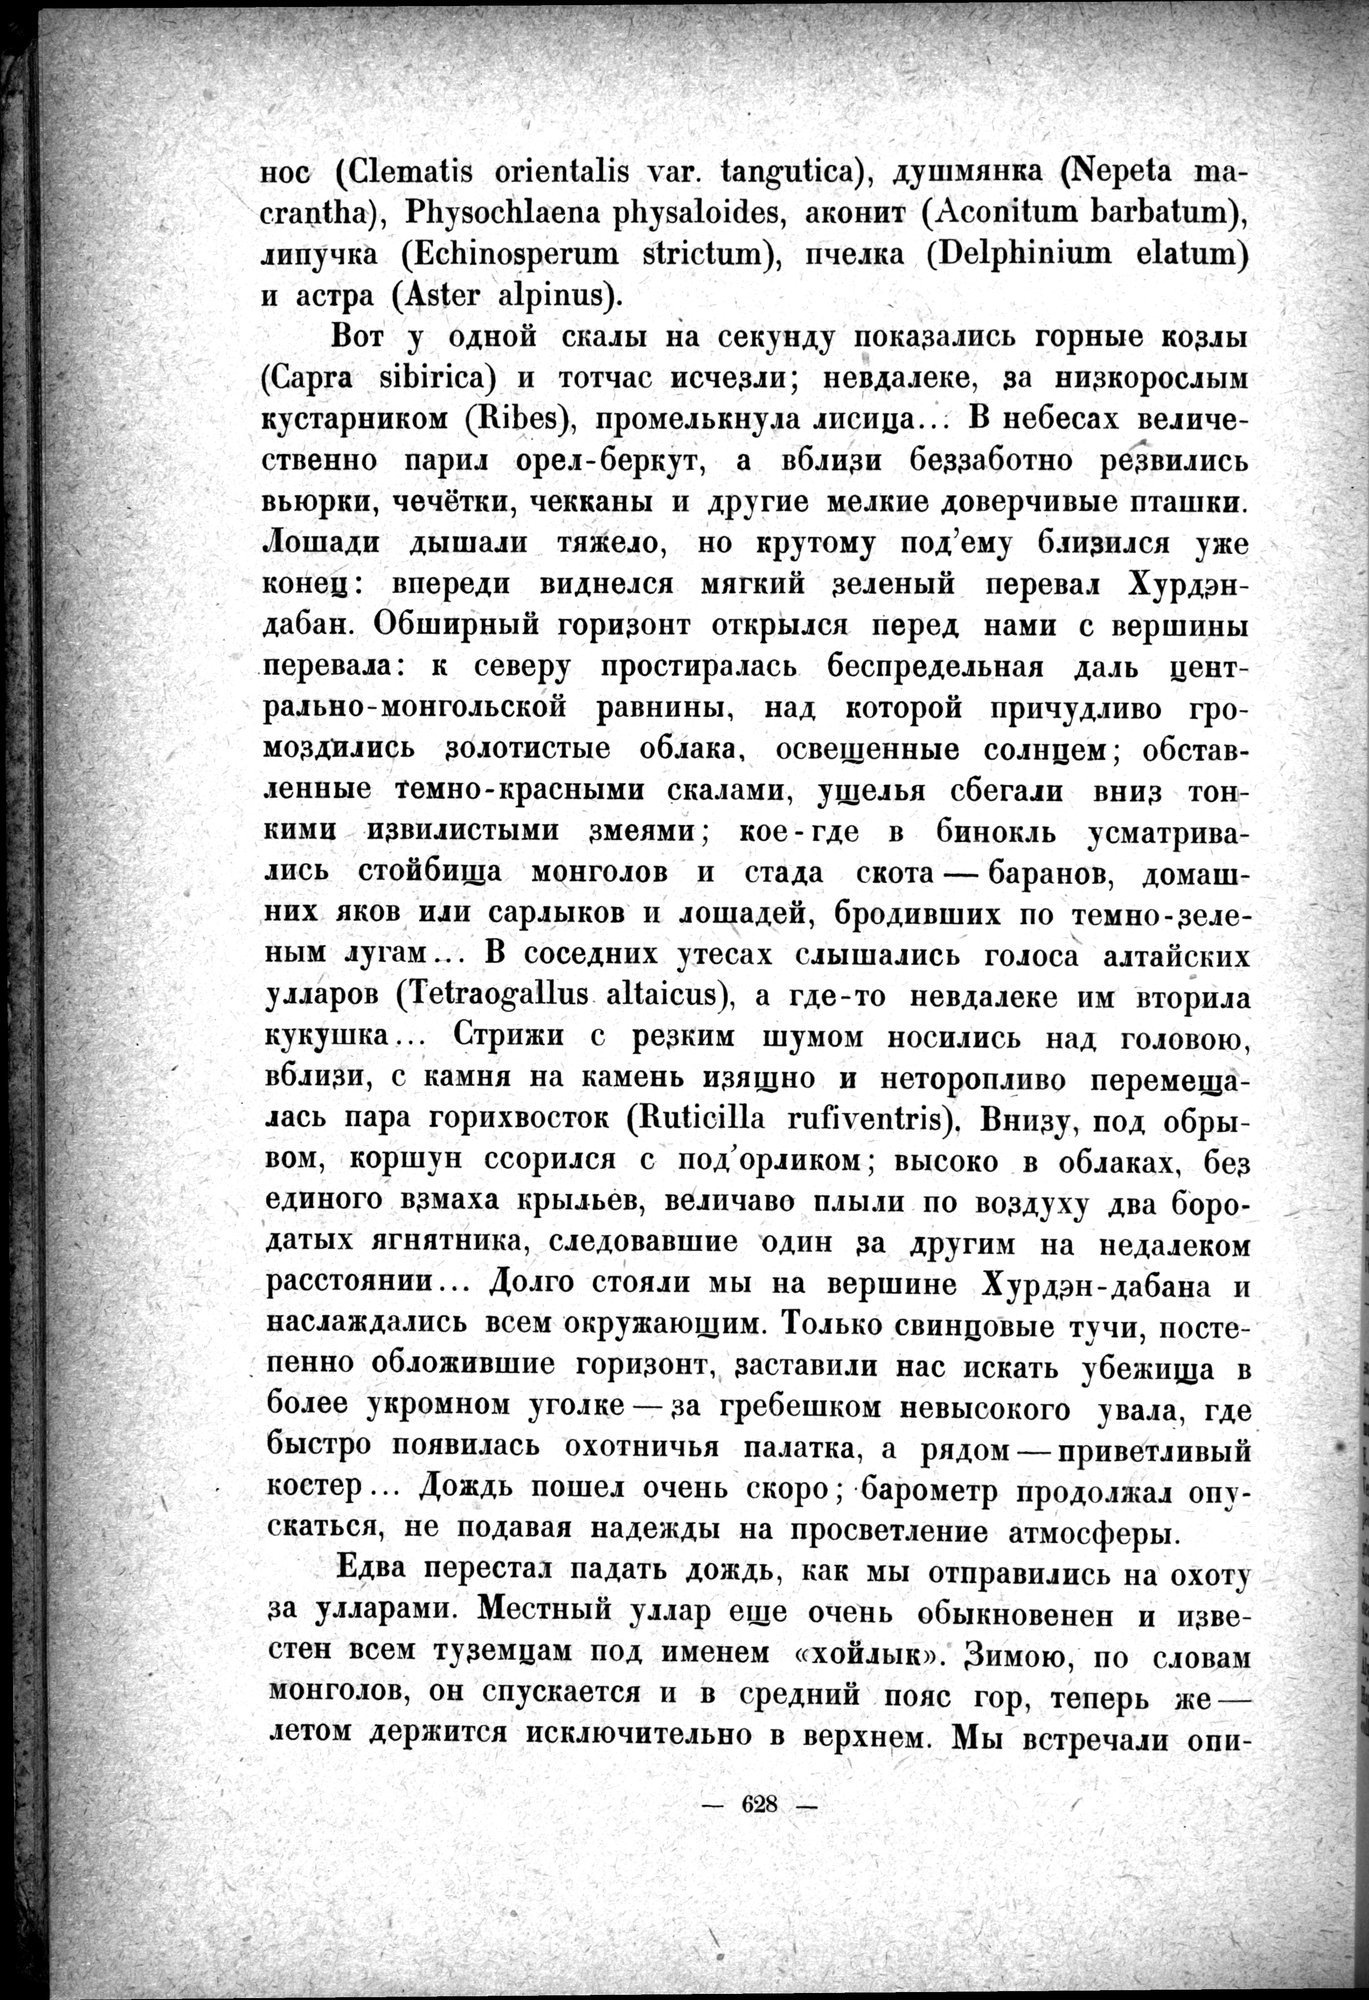 Mongoliya i Amdo i mertby gorod Khara-Khoto : vol.1 / Page 718 (Grayscale High Resolution Image)